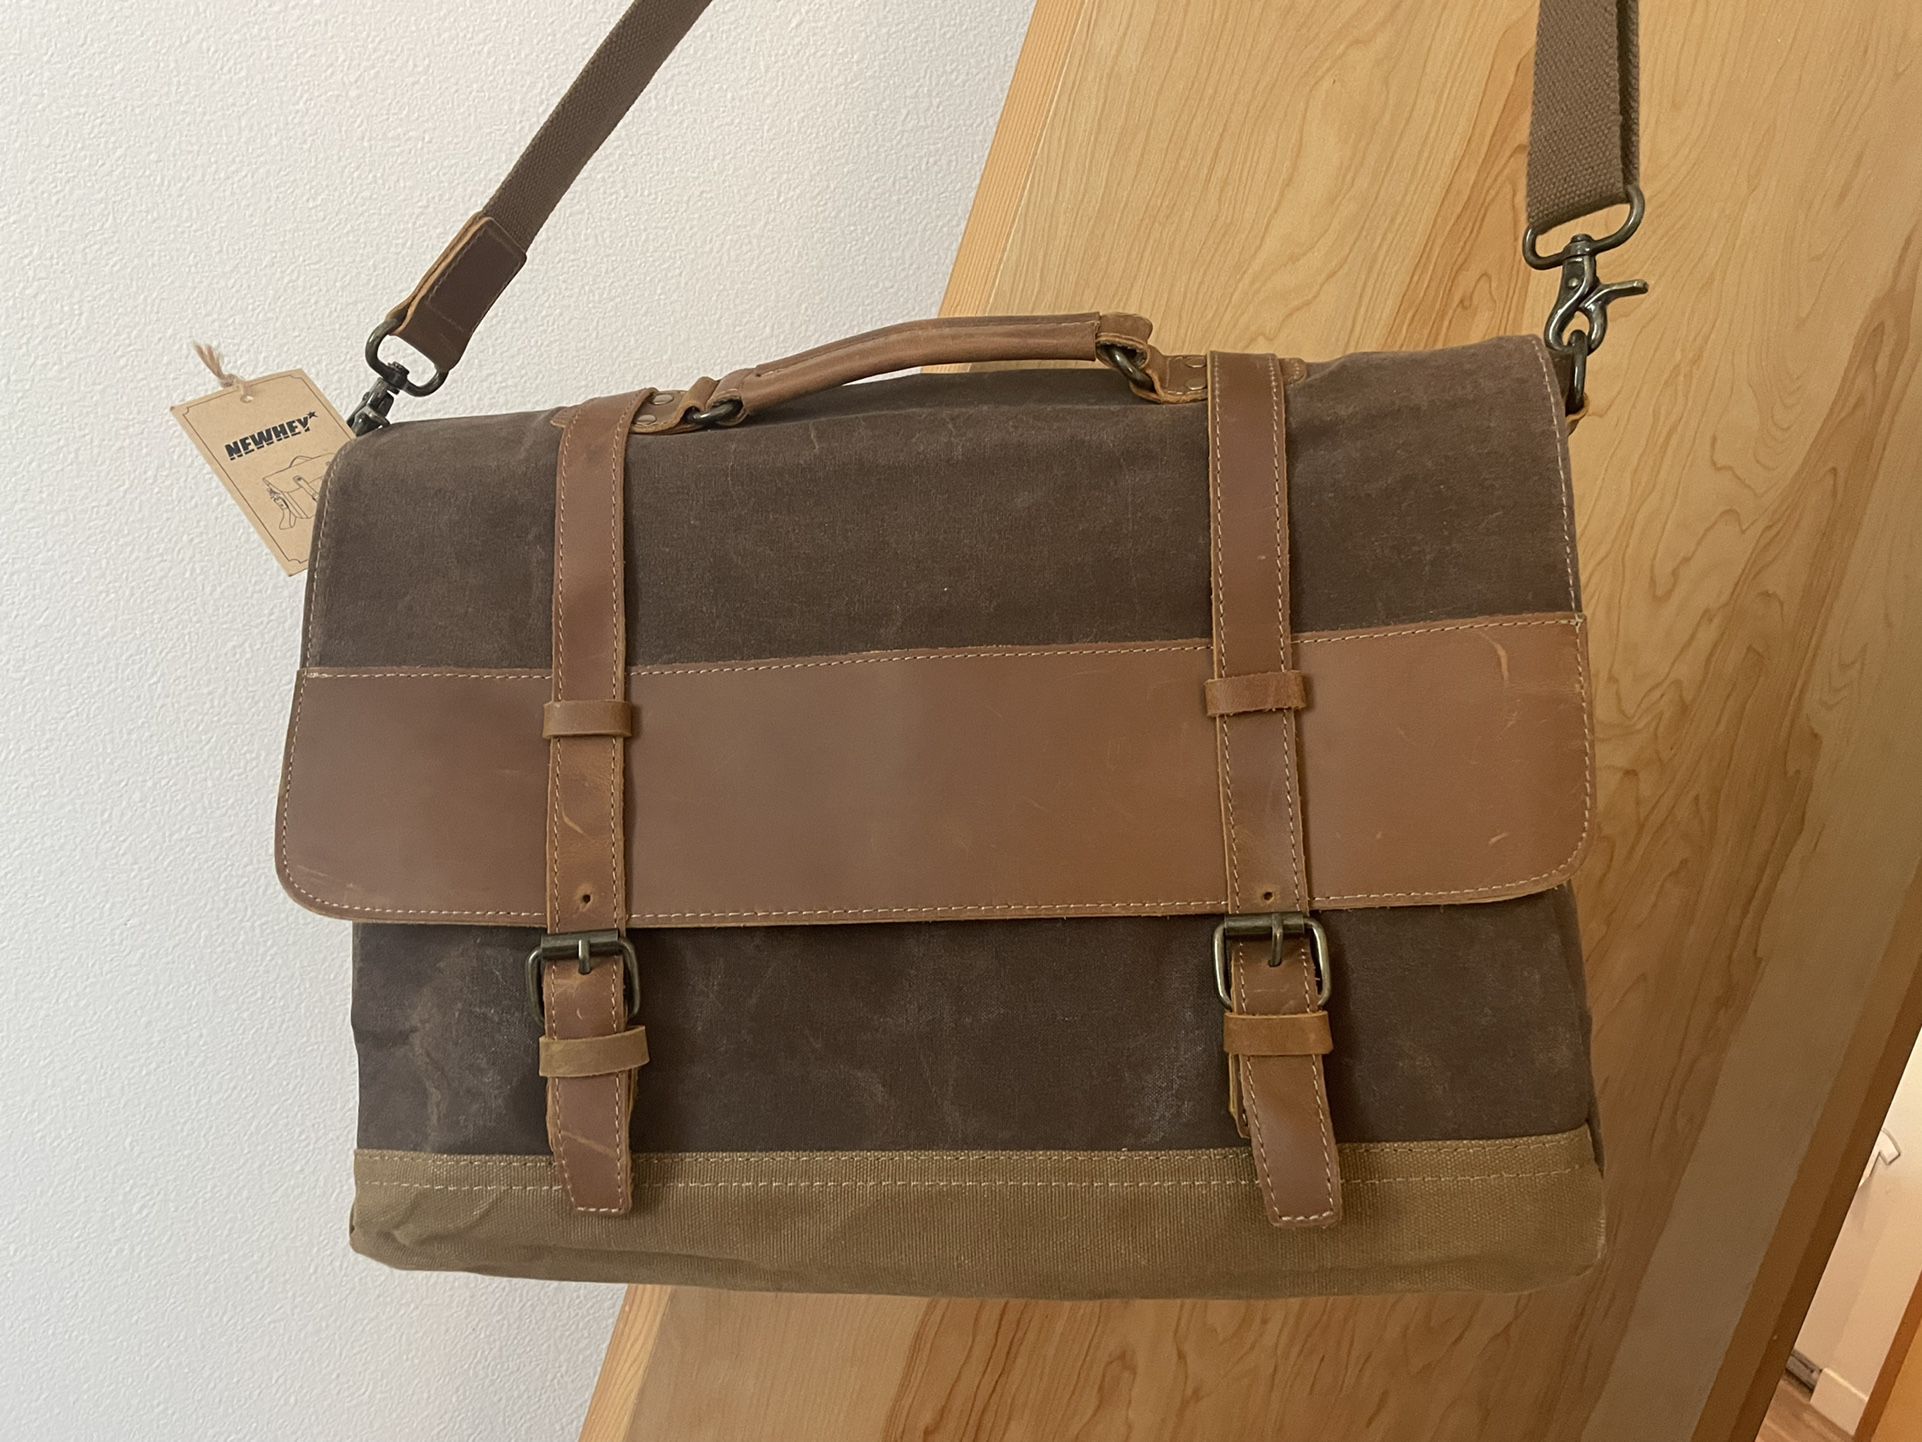 Fashion Forward Work-Travel Bag (Fits Lap Top Comfortably